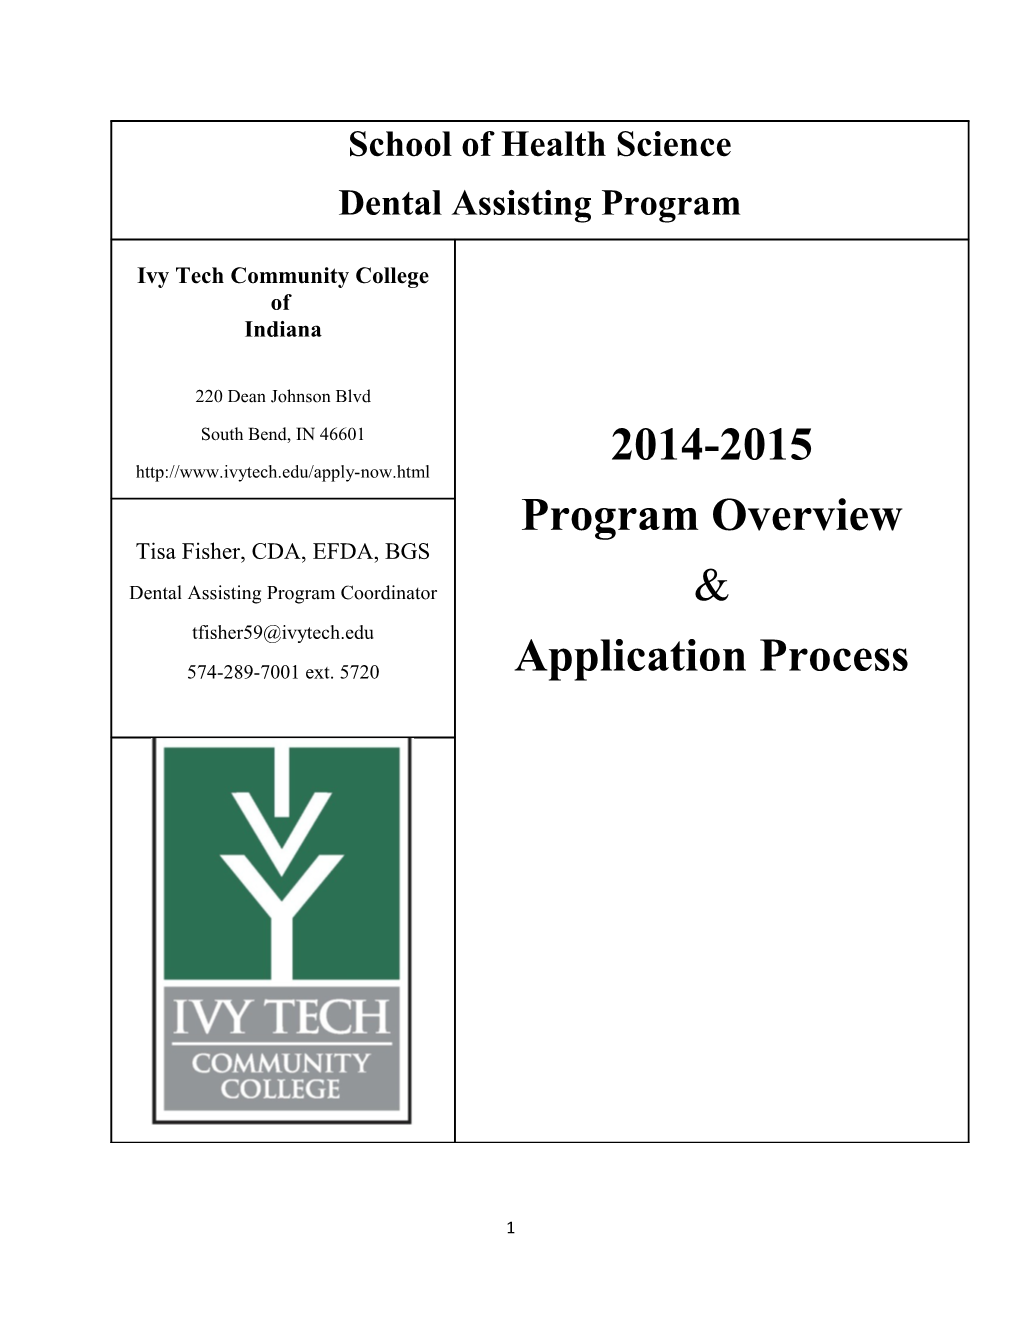 I. Dental Assisting Program